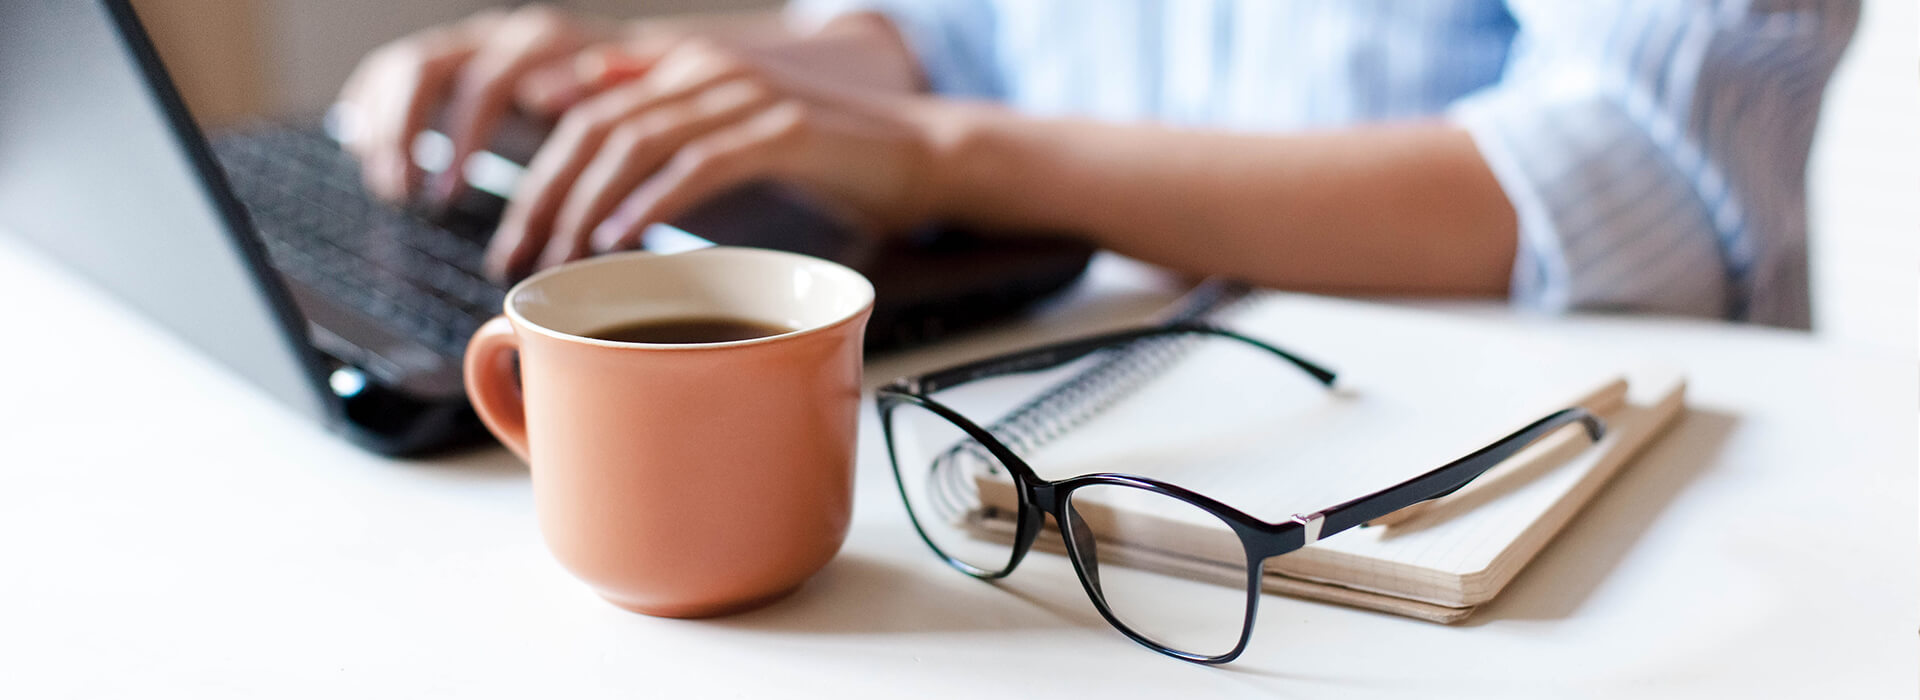 coffee mug and glasses on a desk